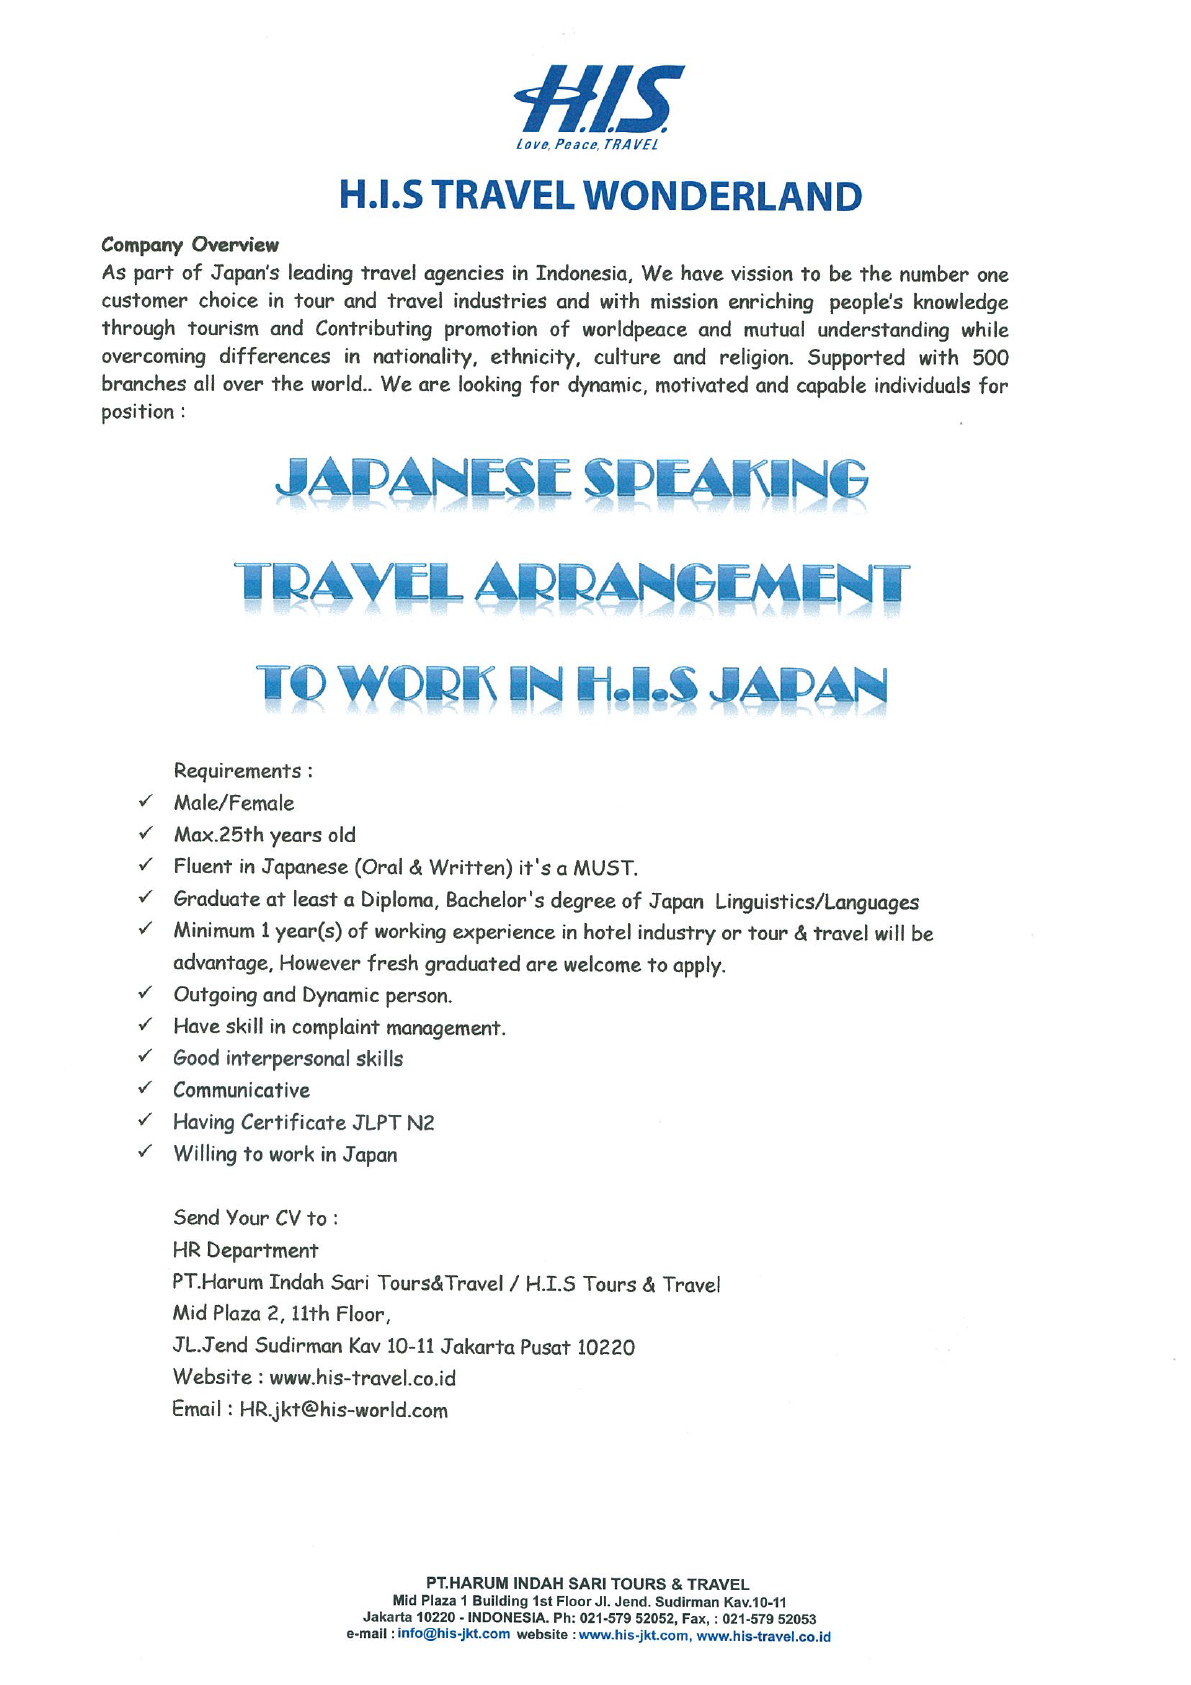 JOB VACANCY FOR JAPANESE SPEAKING TRAVEL ARRANGEMENT TO WORK IN HIS JAPAN